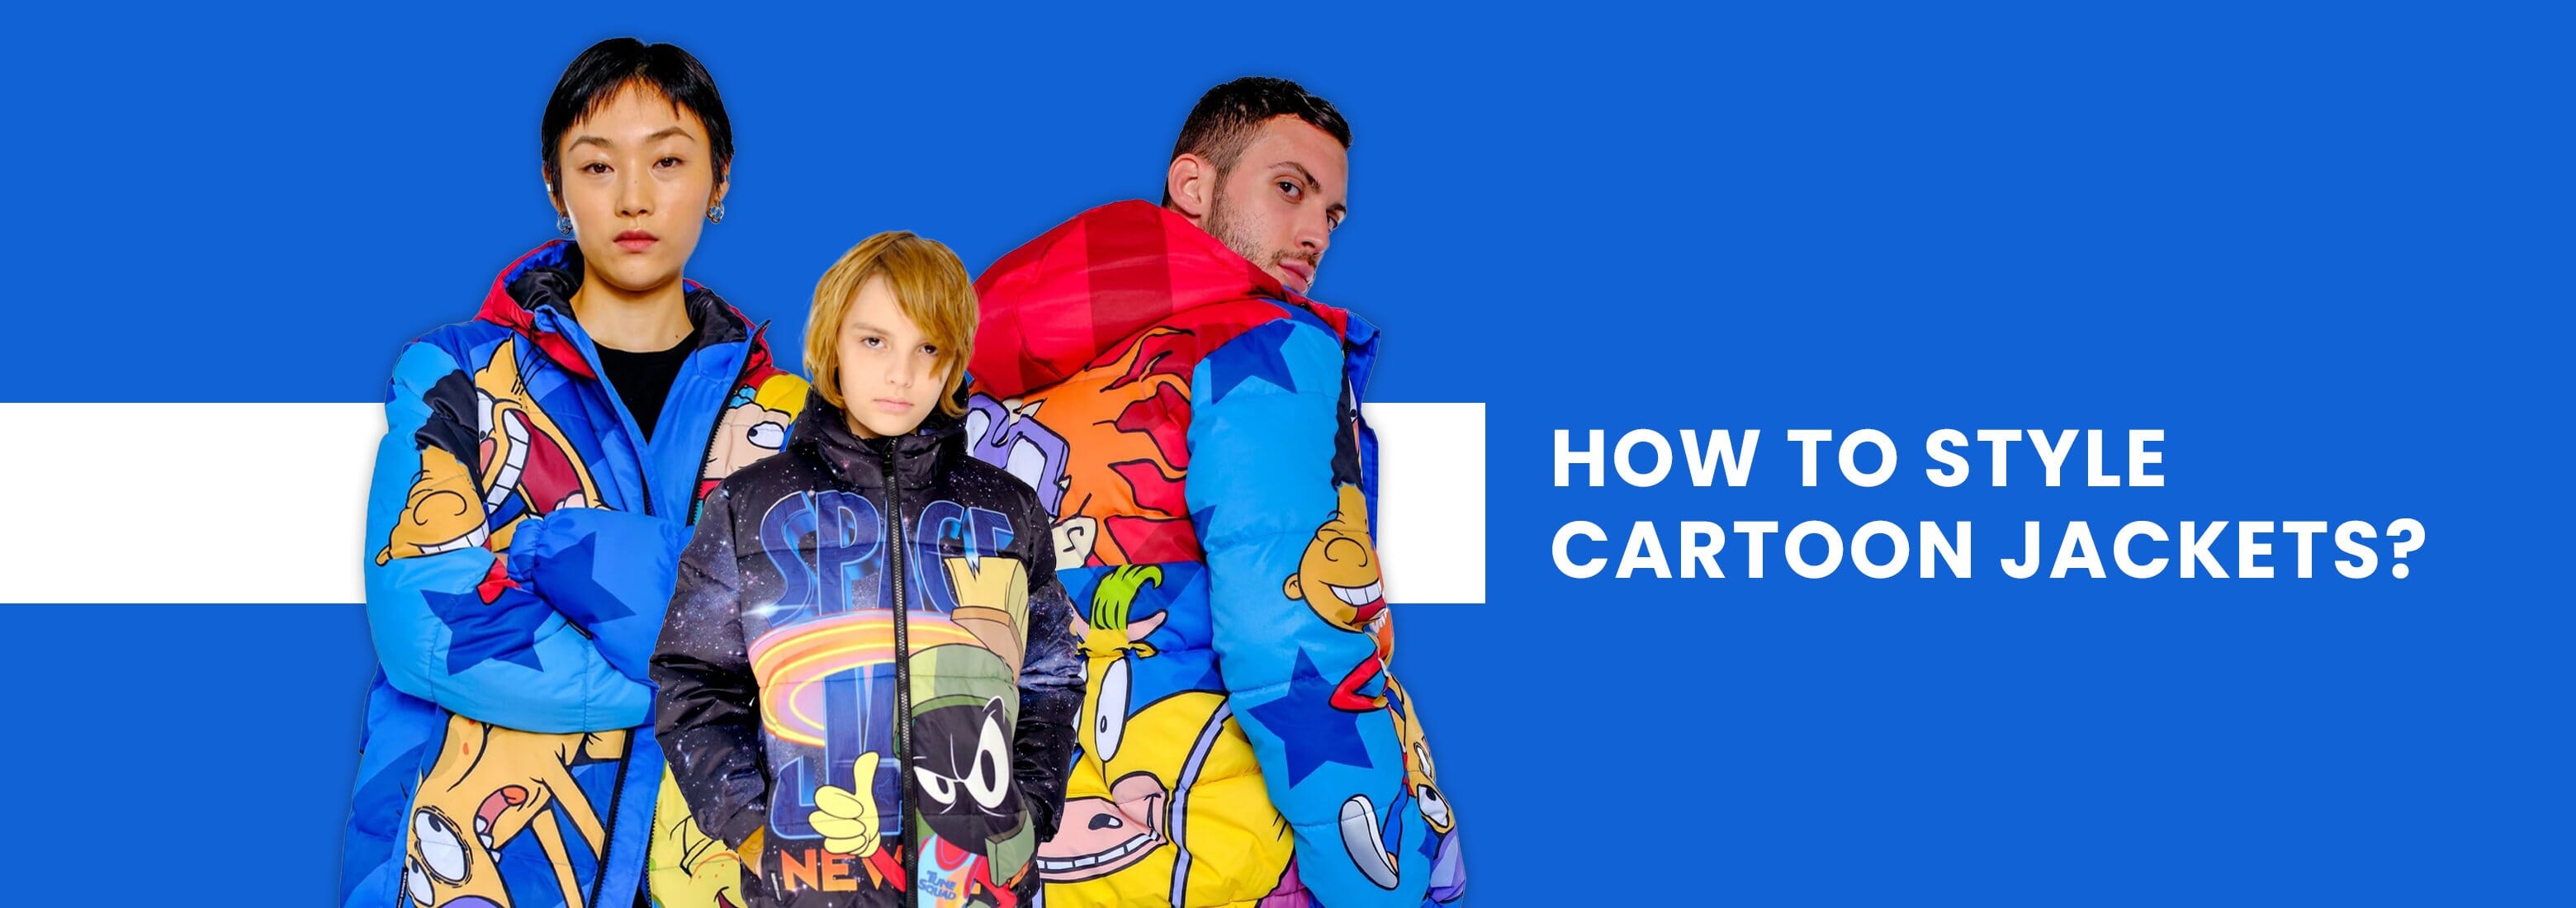 How to style cartoon jackets?